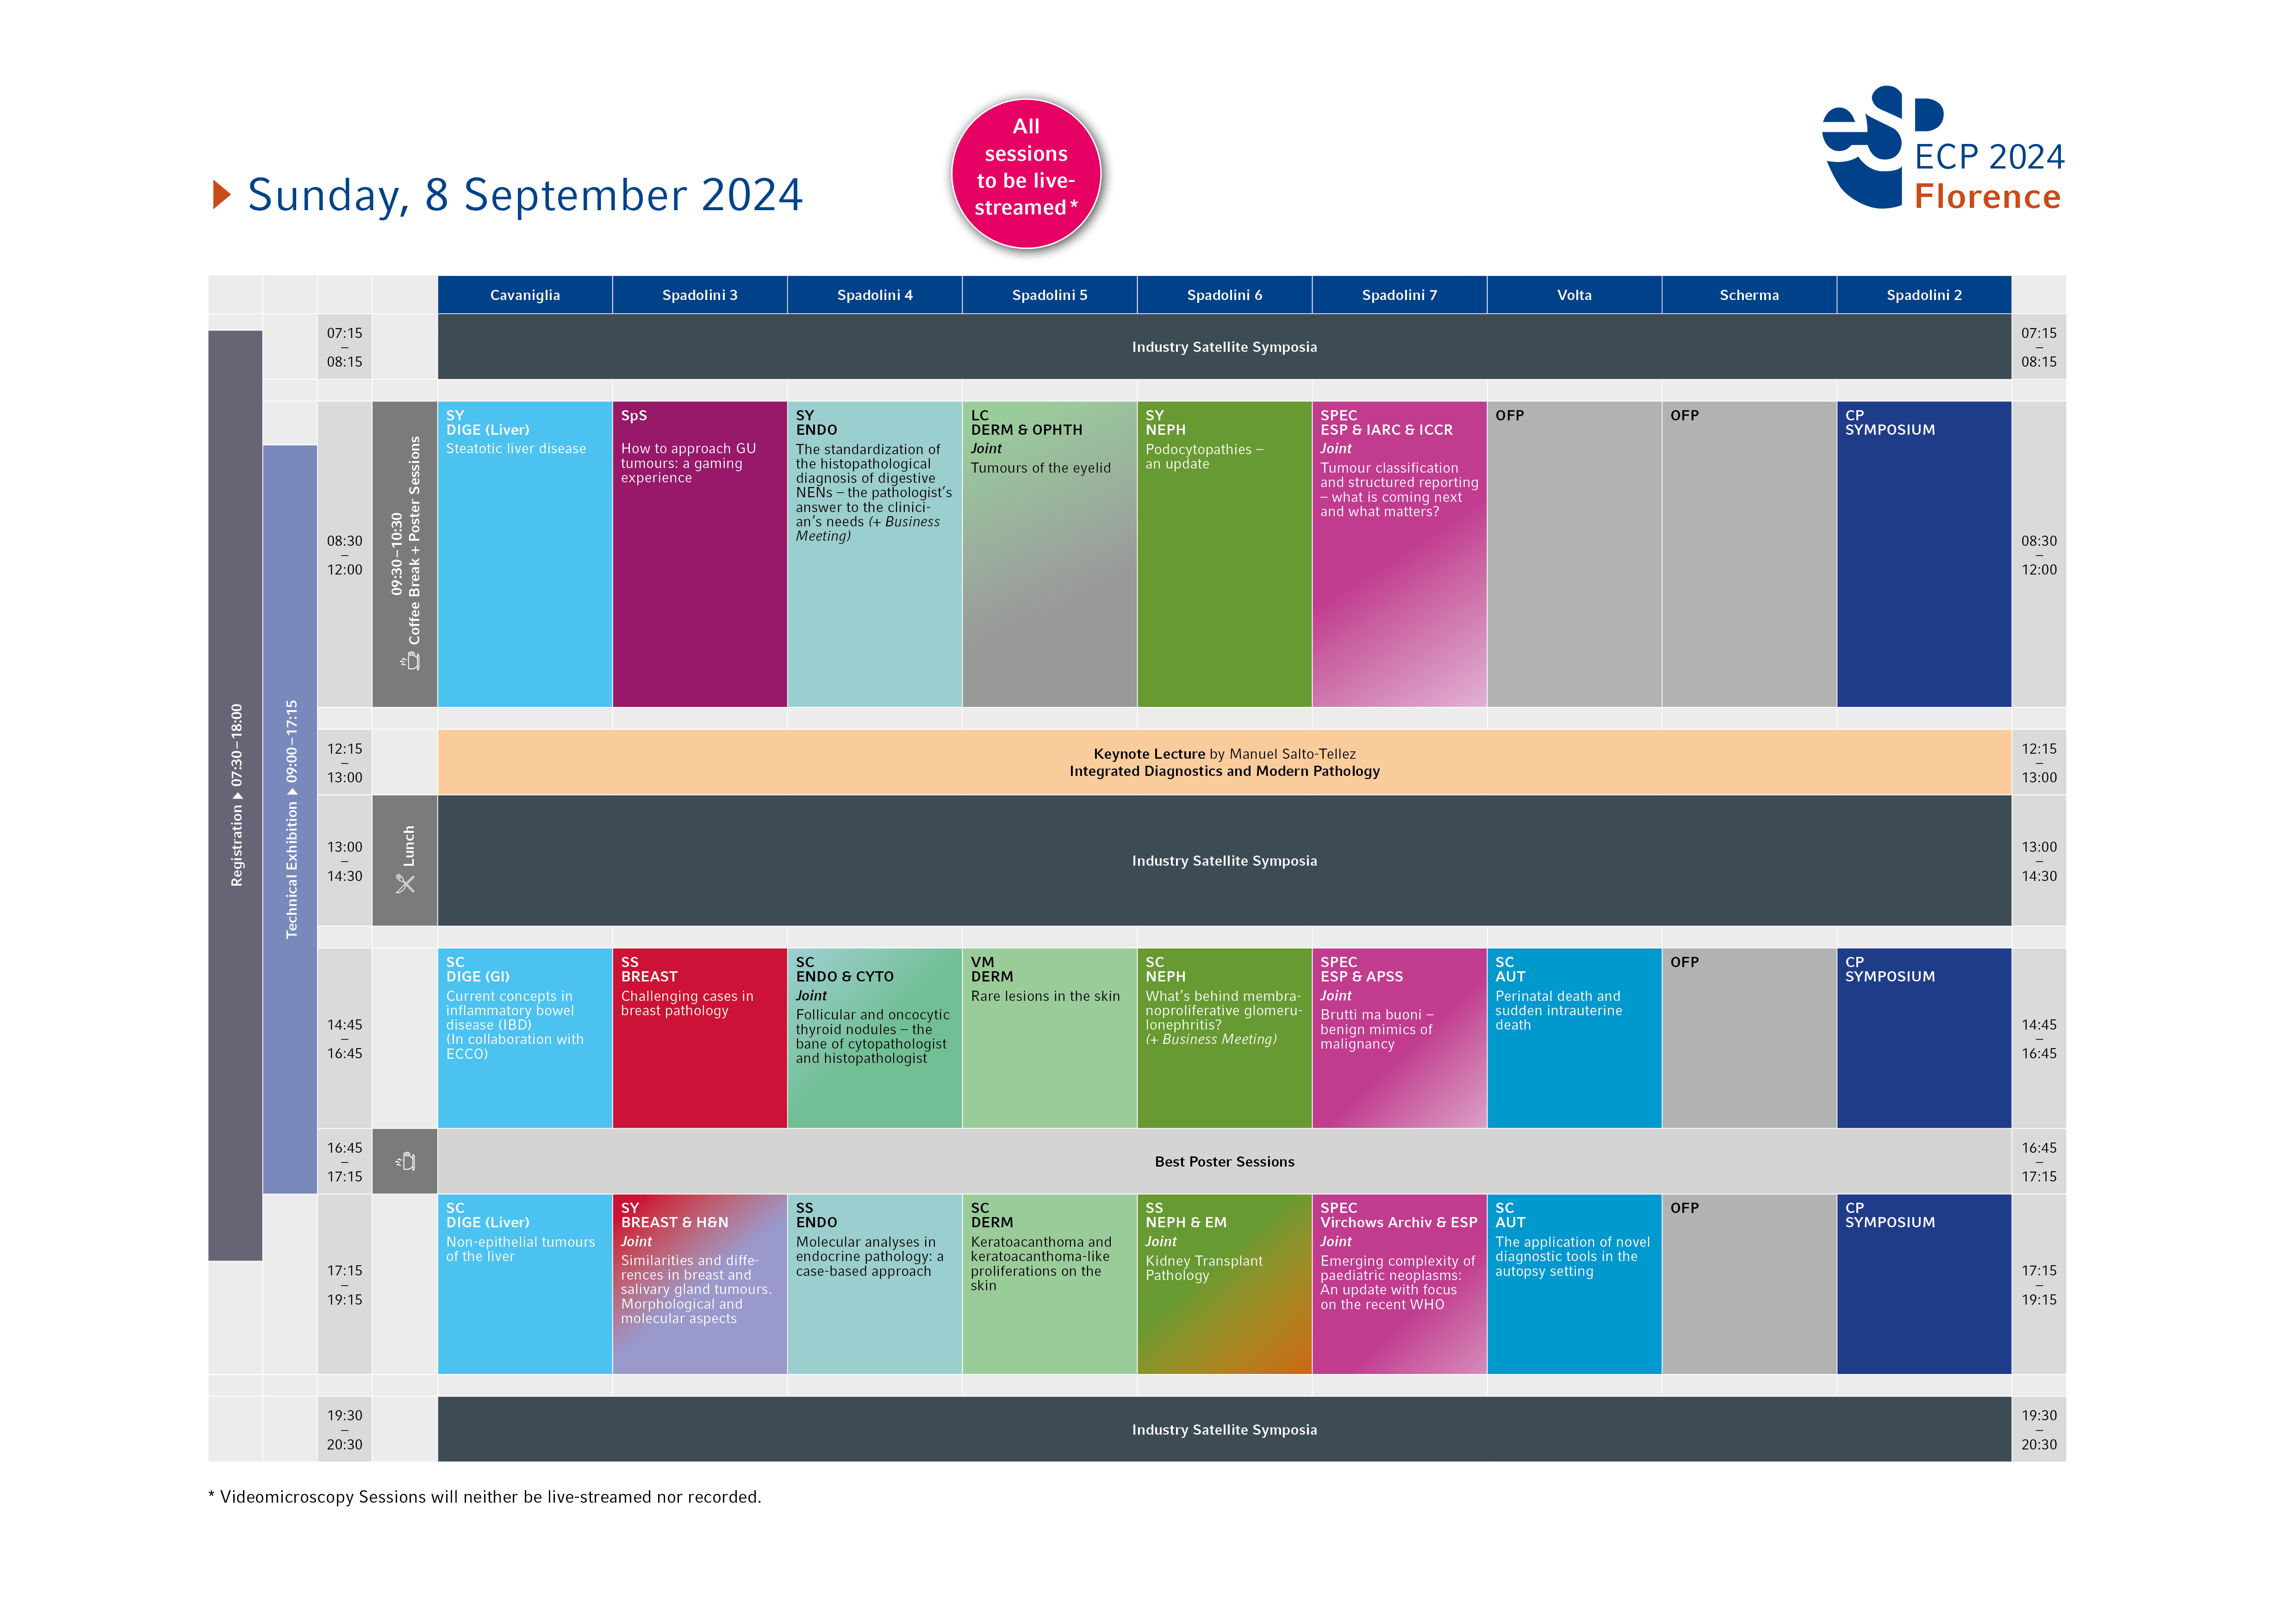 Programme Schedule - Sunday, 8 September 2024